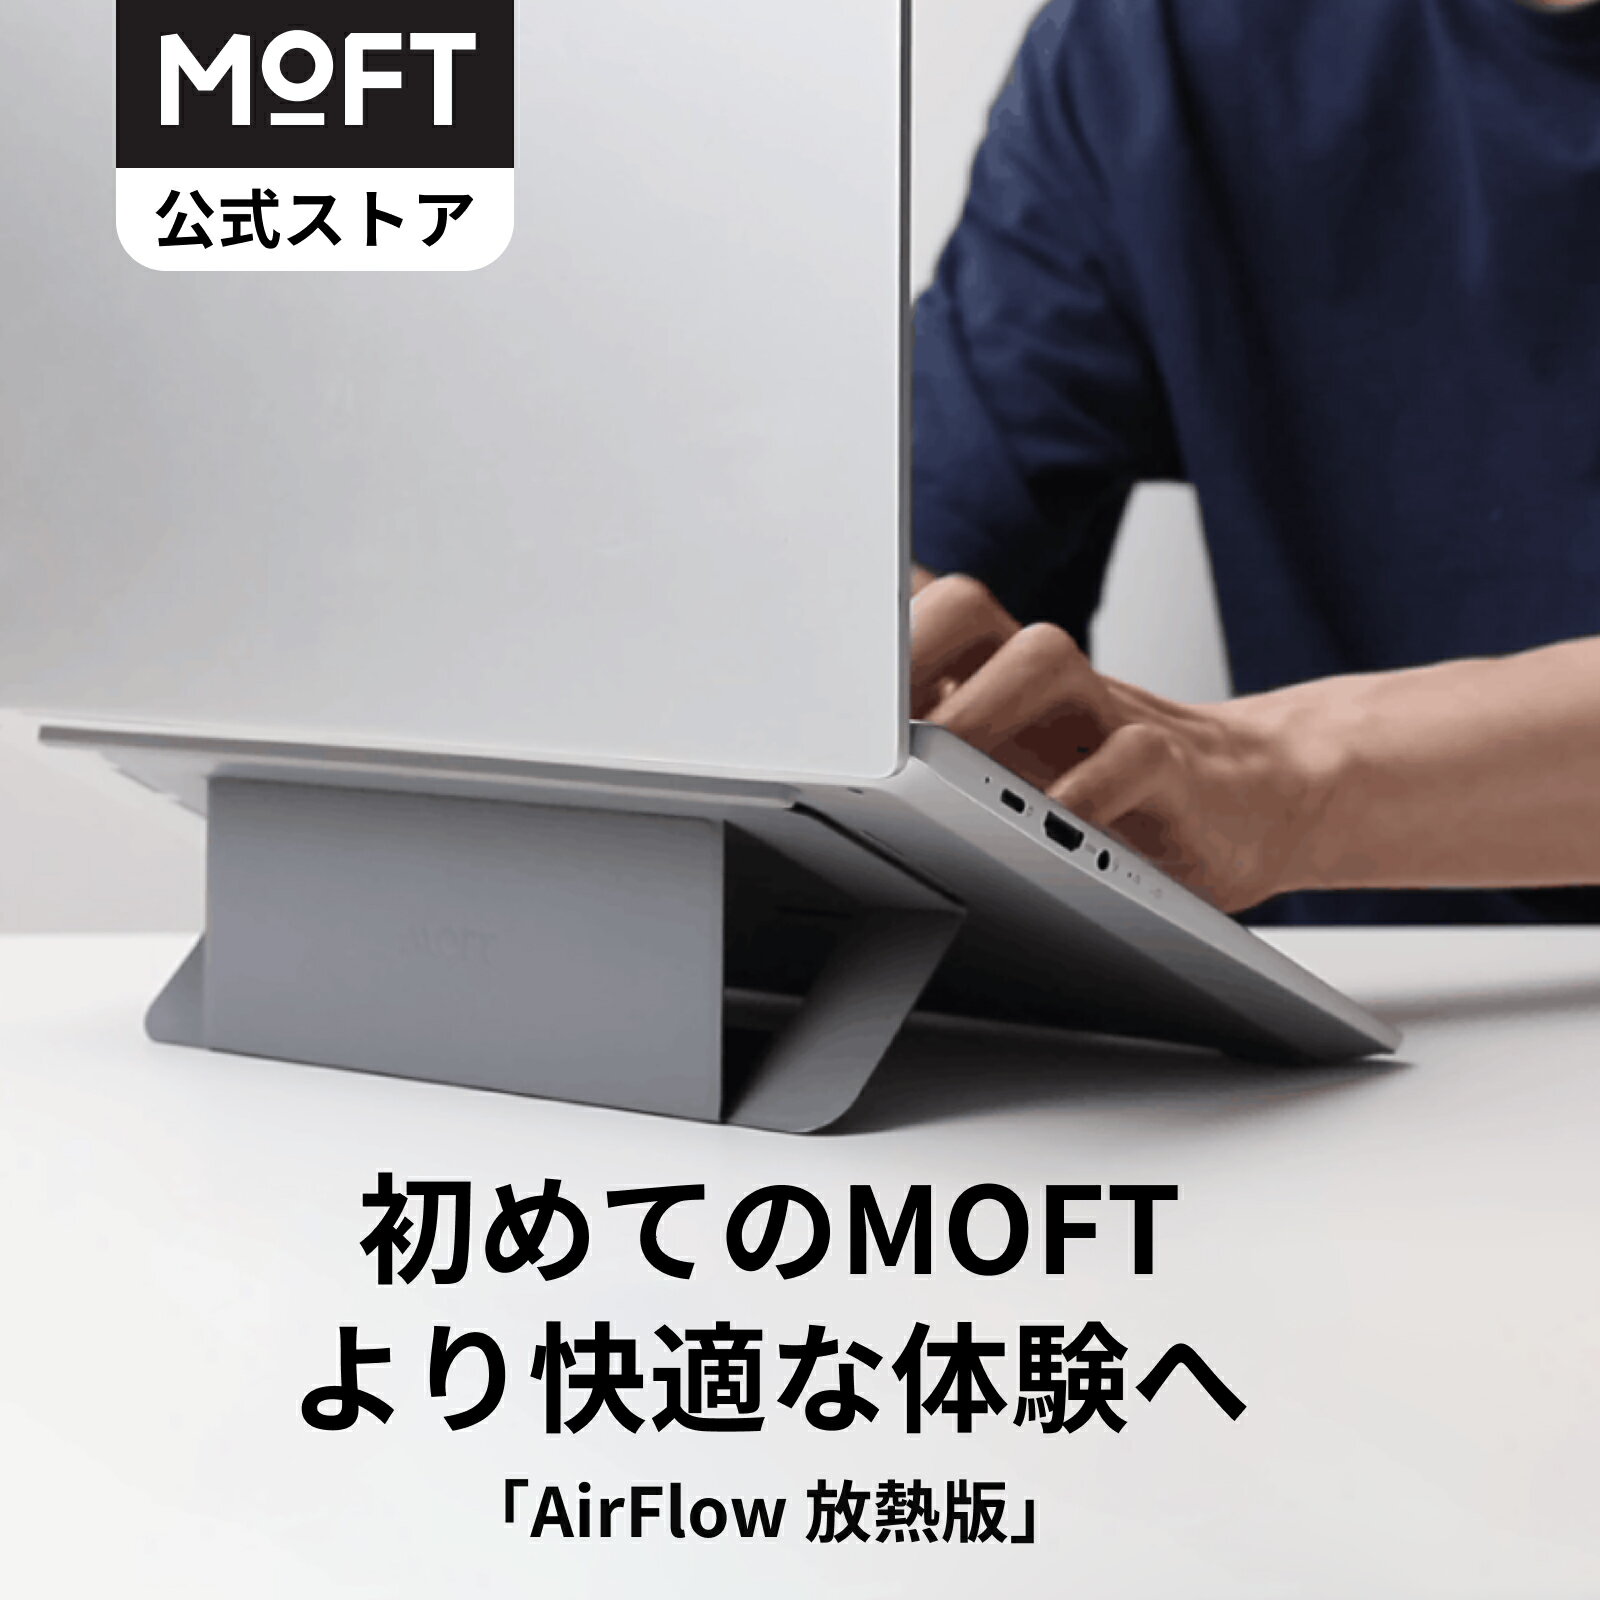 【MOFT公式〜コスパ最強水準】MOFT公式 AirFlow パソコン スタンド 15°&25° PCスタンド 通気口付き 二段階調整可能 折り畳式 軽量 超薄型 シンプル 中空デザイン 収納便利 ミニマリスト 互換性 ラップトップスタンド